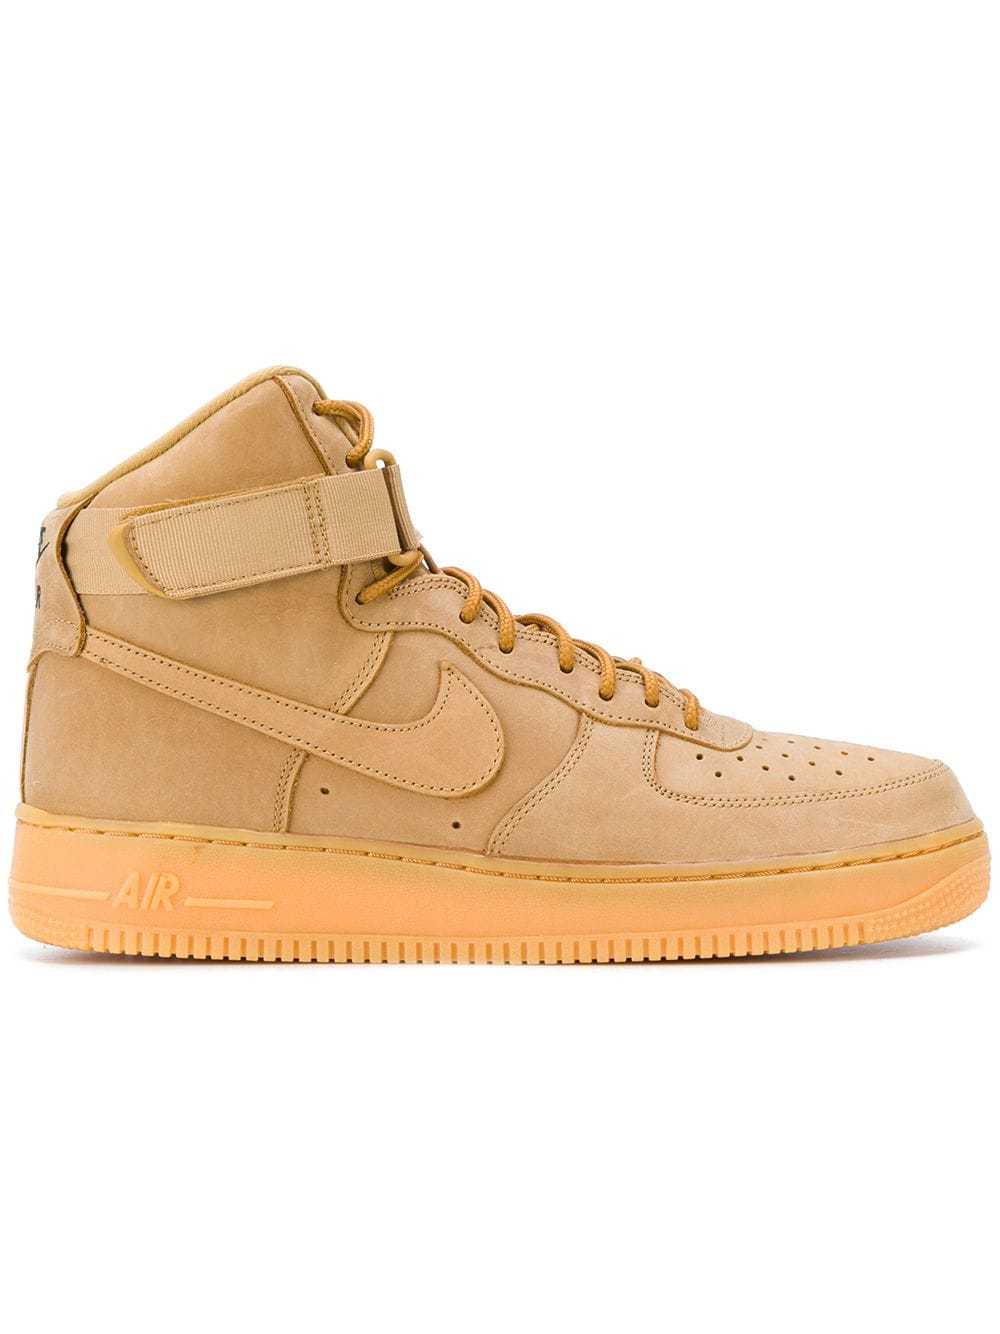 Nike Air Force 1 High 07 Sneakers, $180 